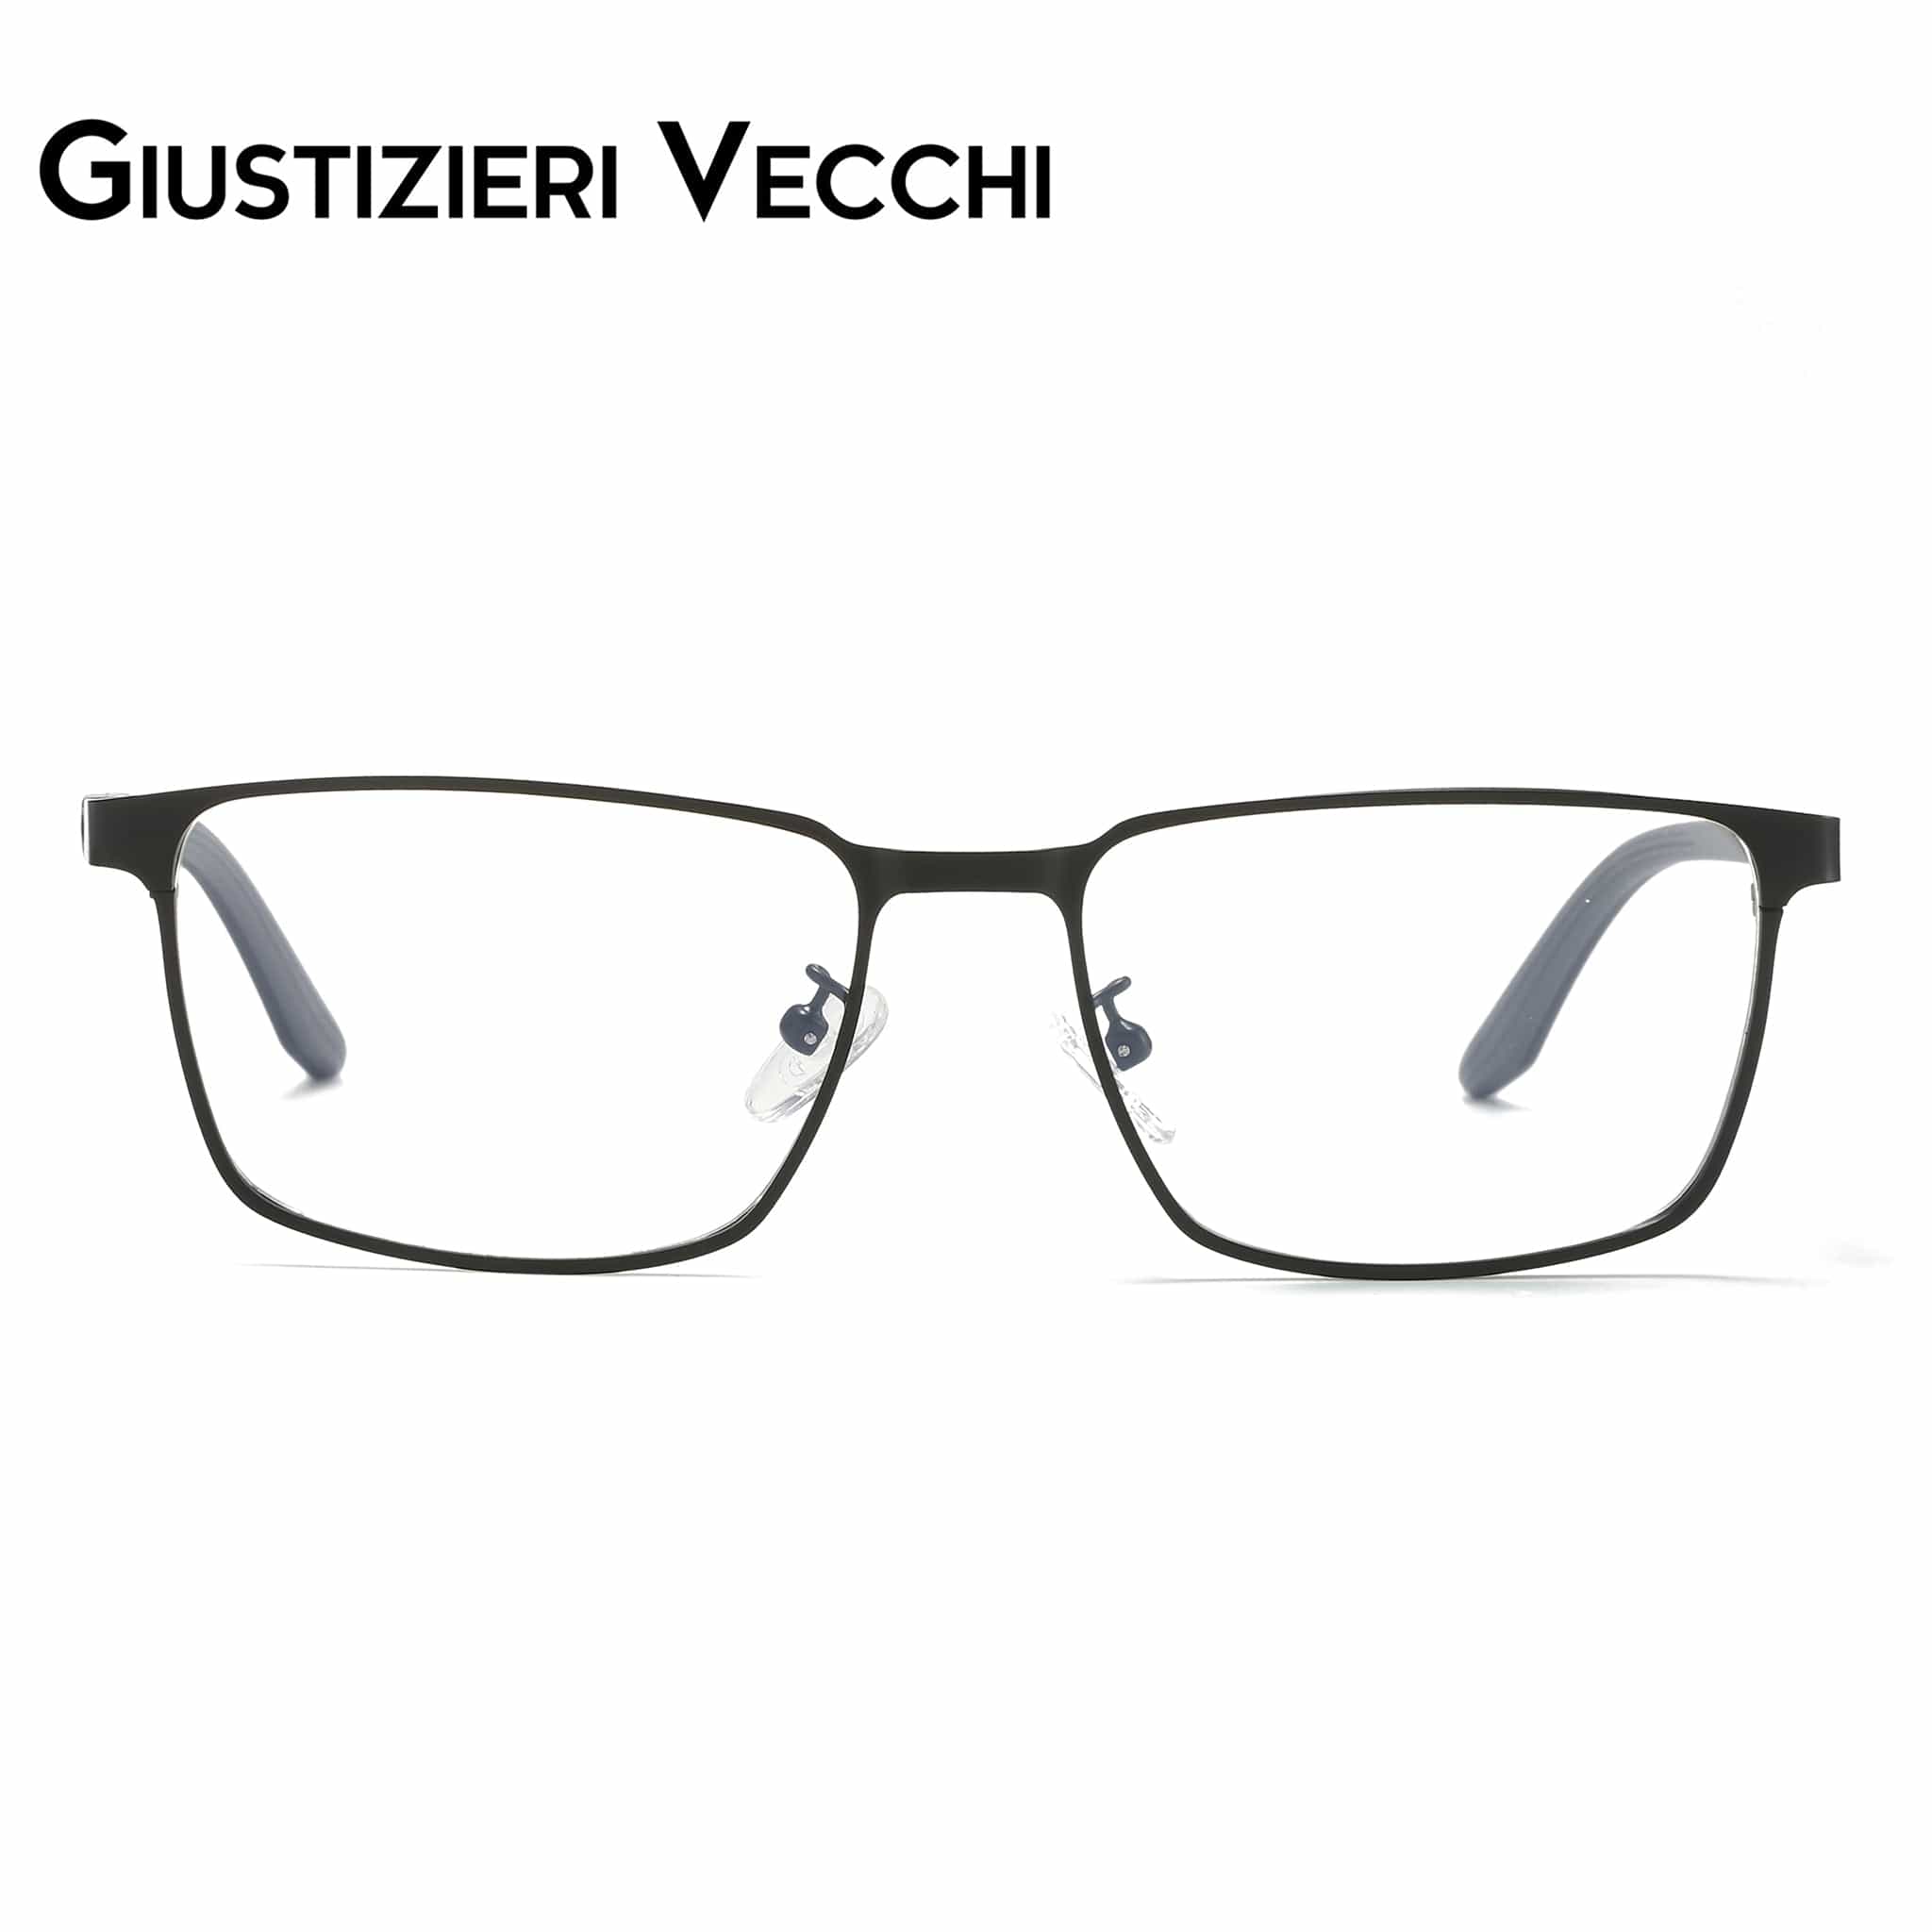 GIUSTIZIERI VECCHI Eyeglasses Black with Grey / Large IceSurf Uno